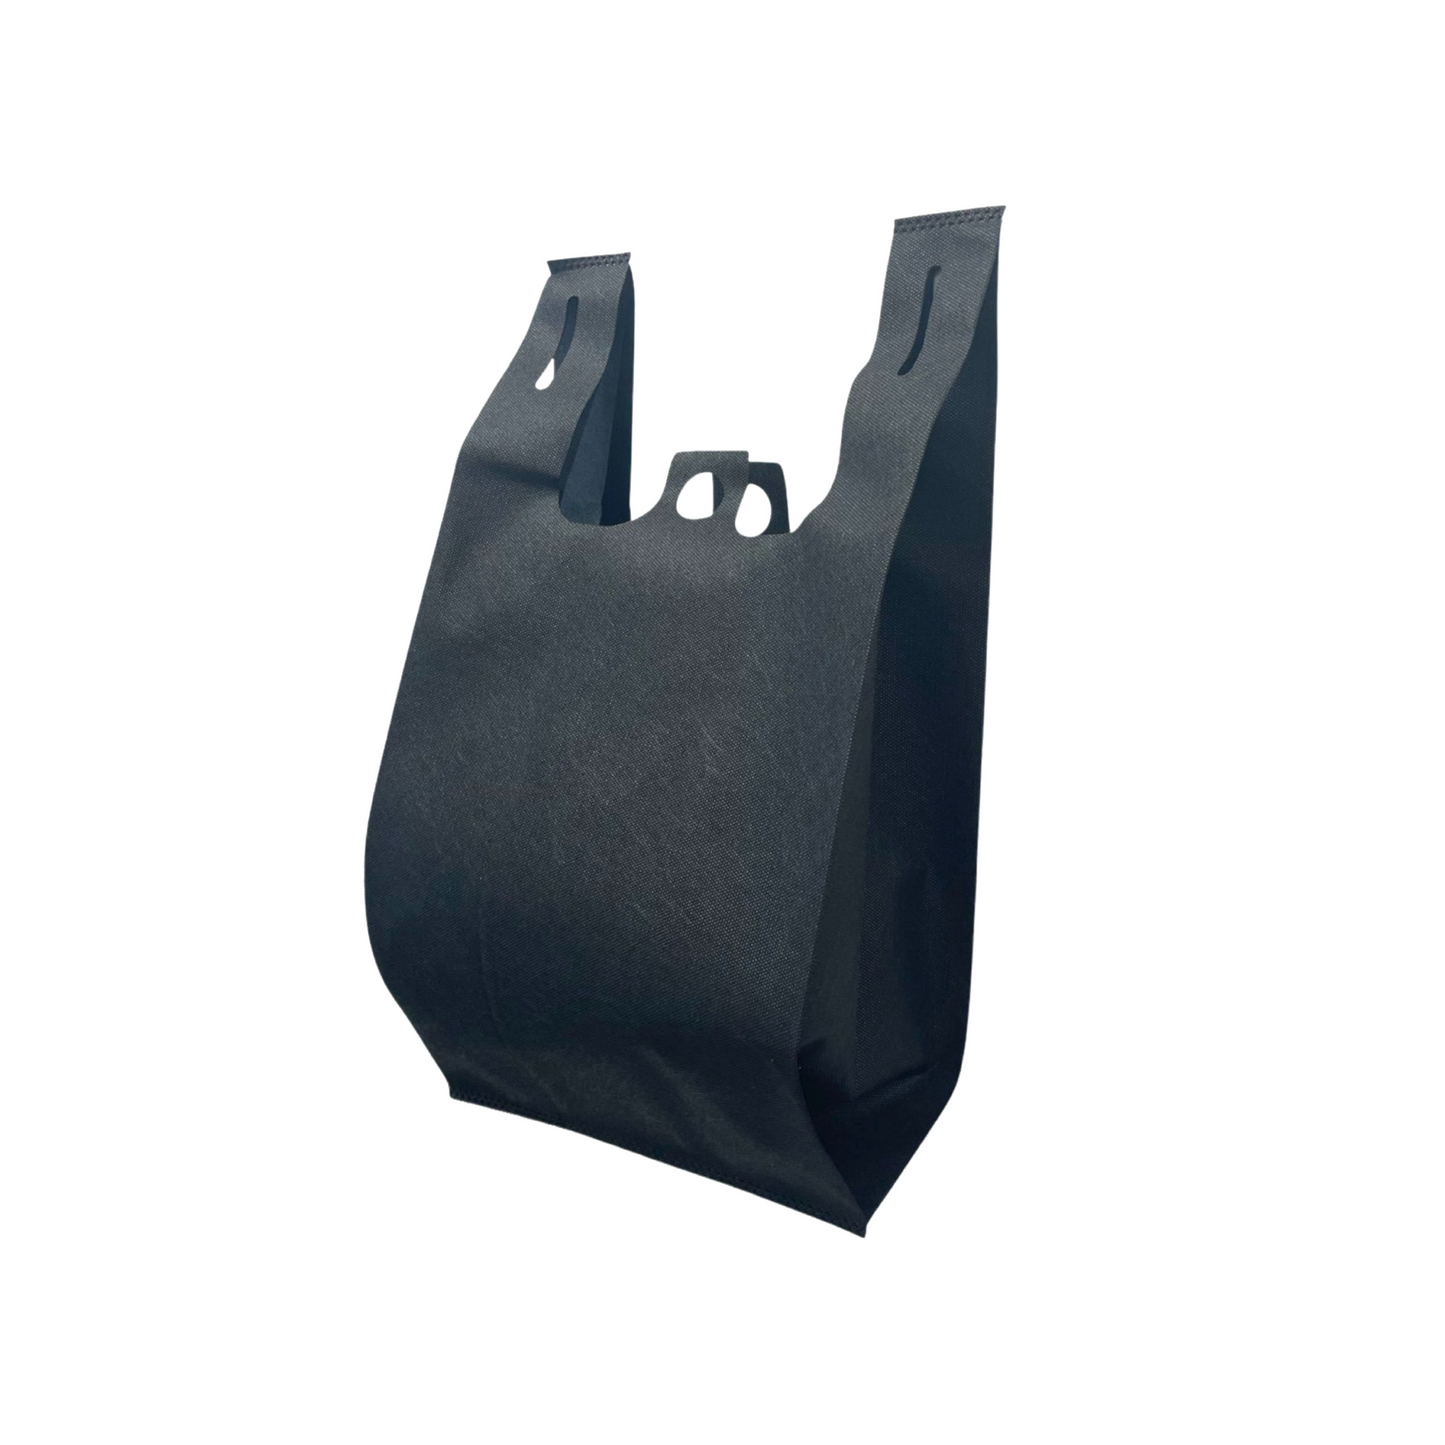 200pcs Non-Woven Reusable T-Shirt Bag 12x7x22 inches Black Shopping Bags Pinch Bottom; $0.42/bag